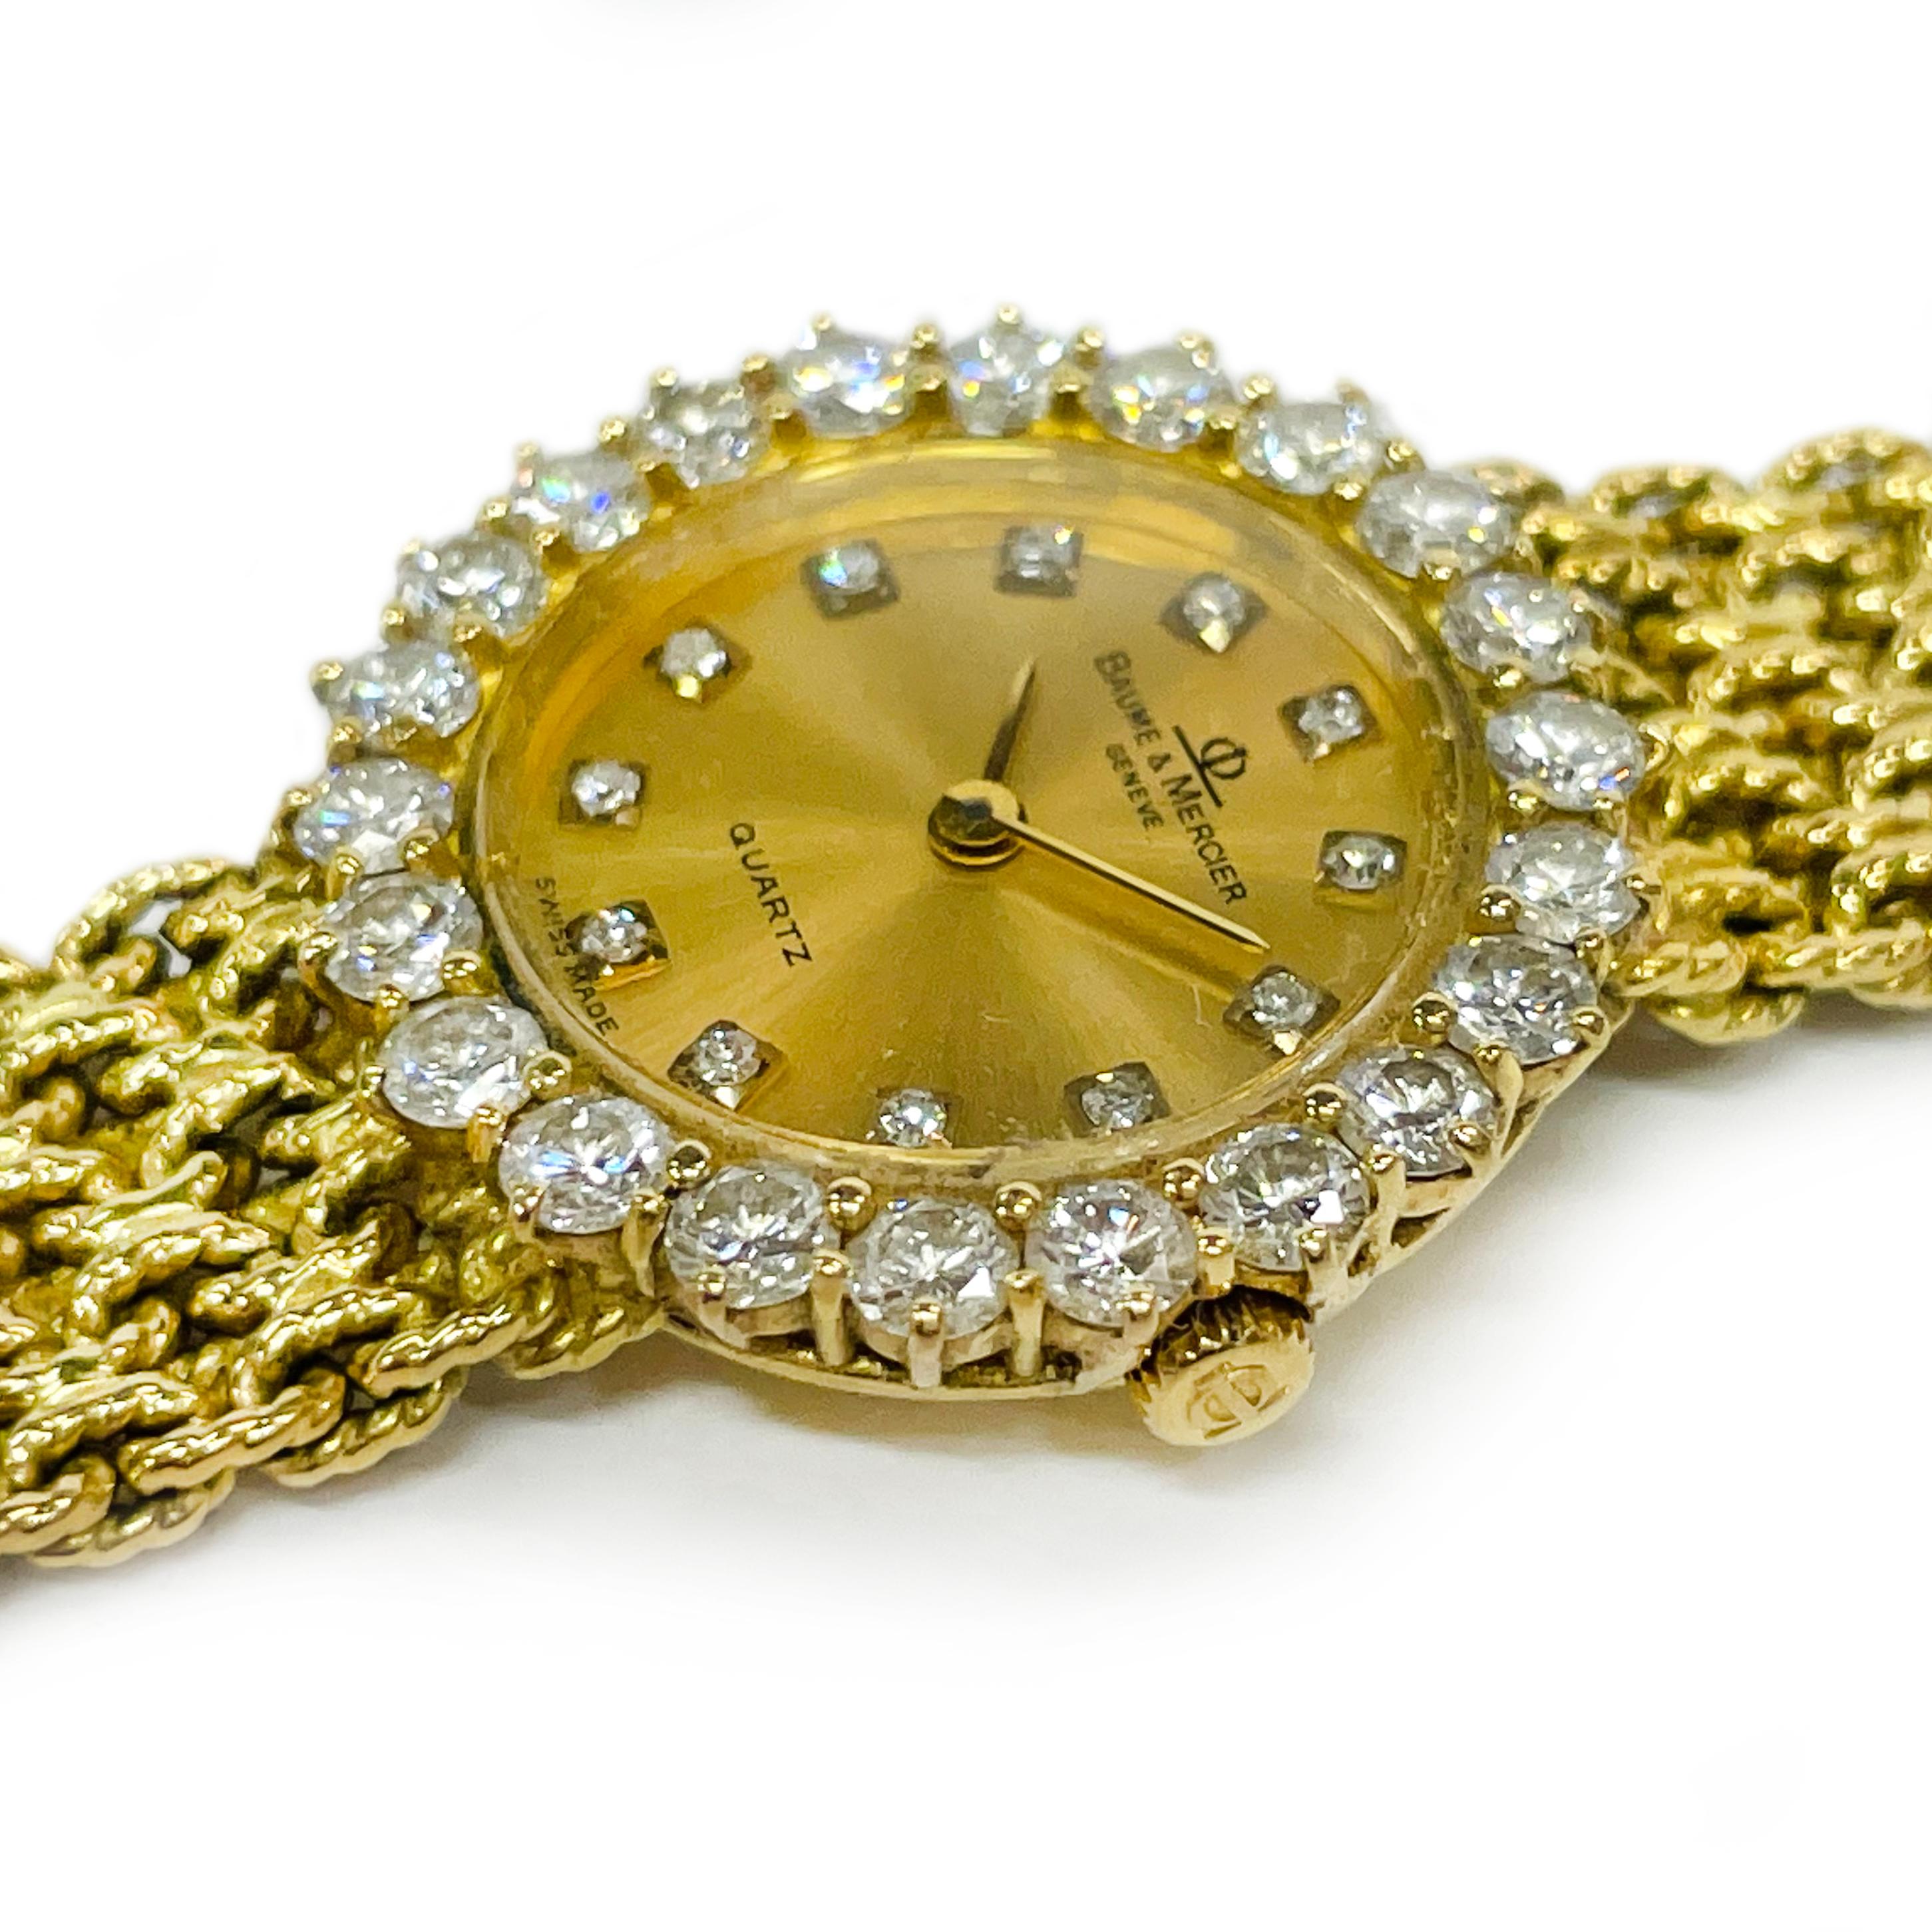 baume and mercier diamond watch